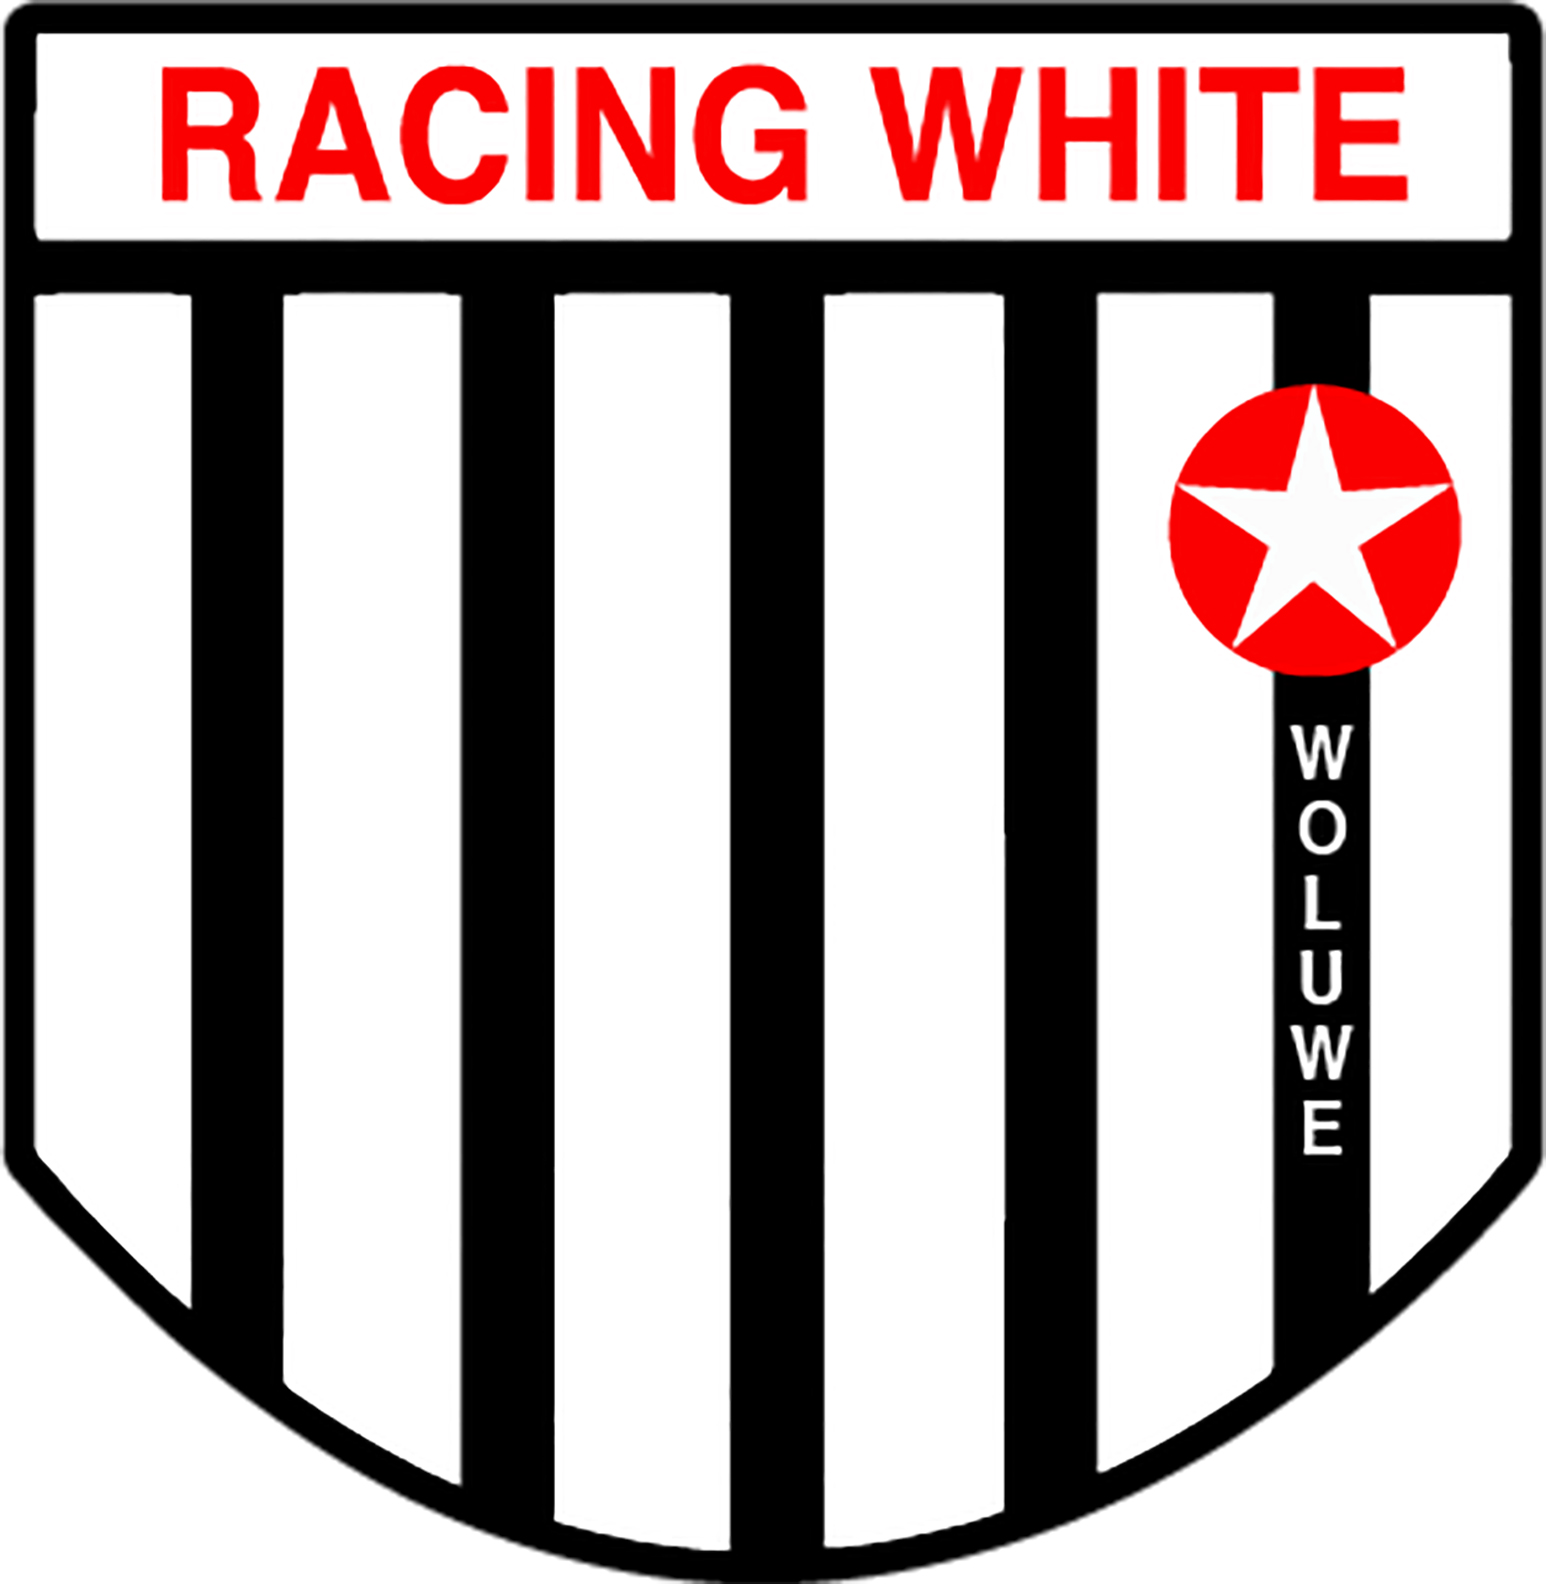 12 - Racing White Woluwe A